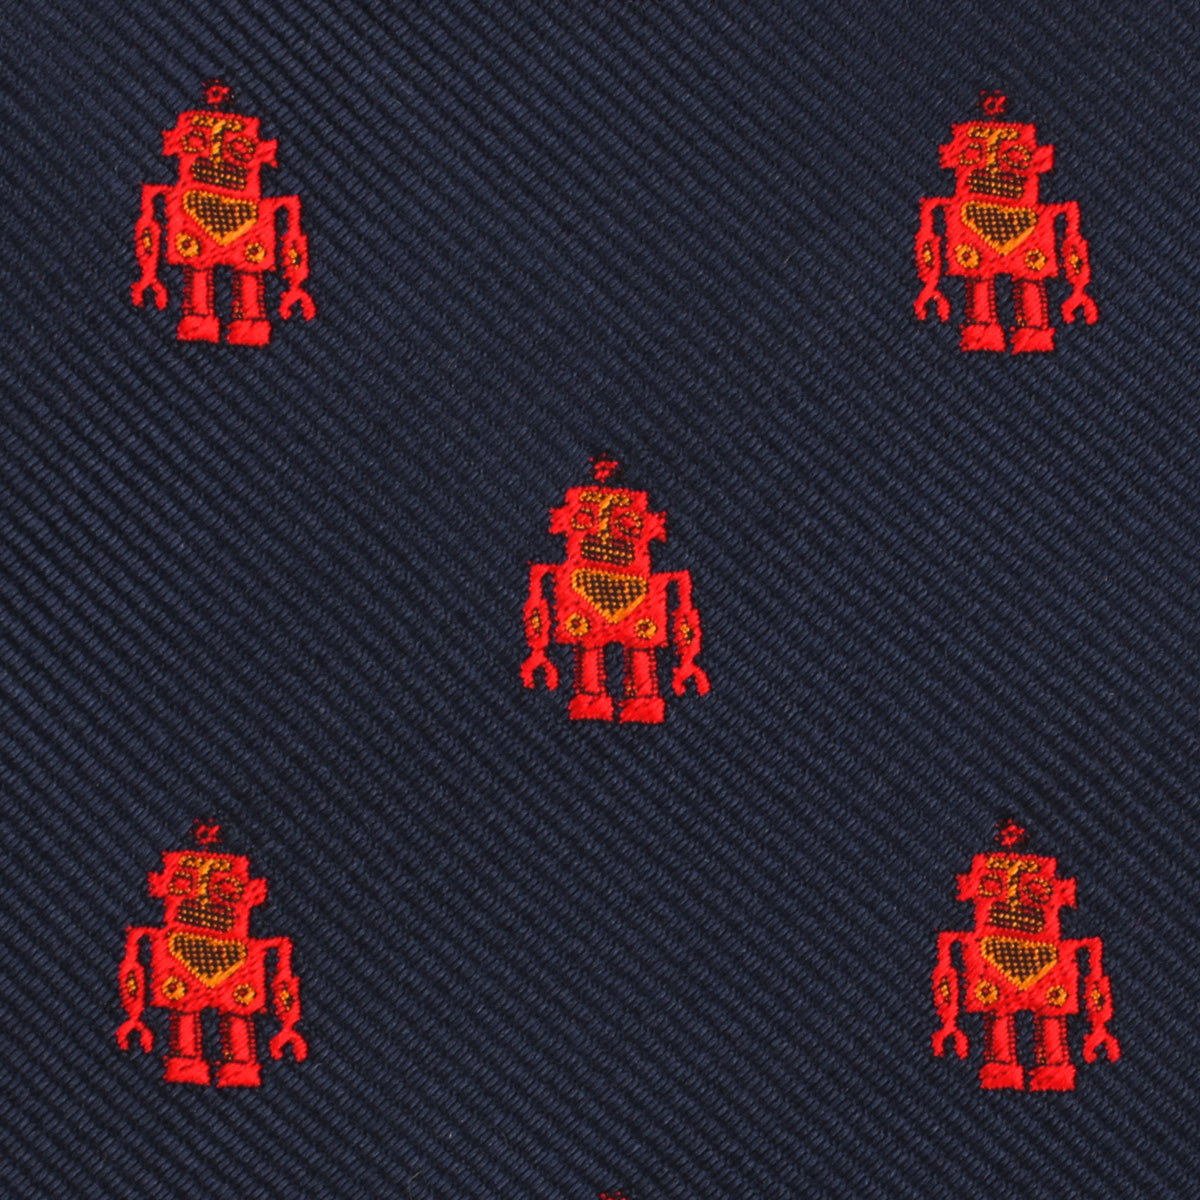 Angry Robot Pocket Square Fabric